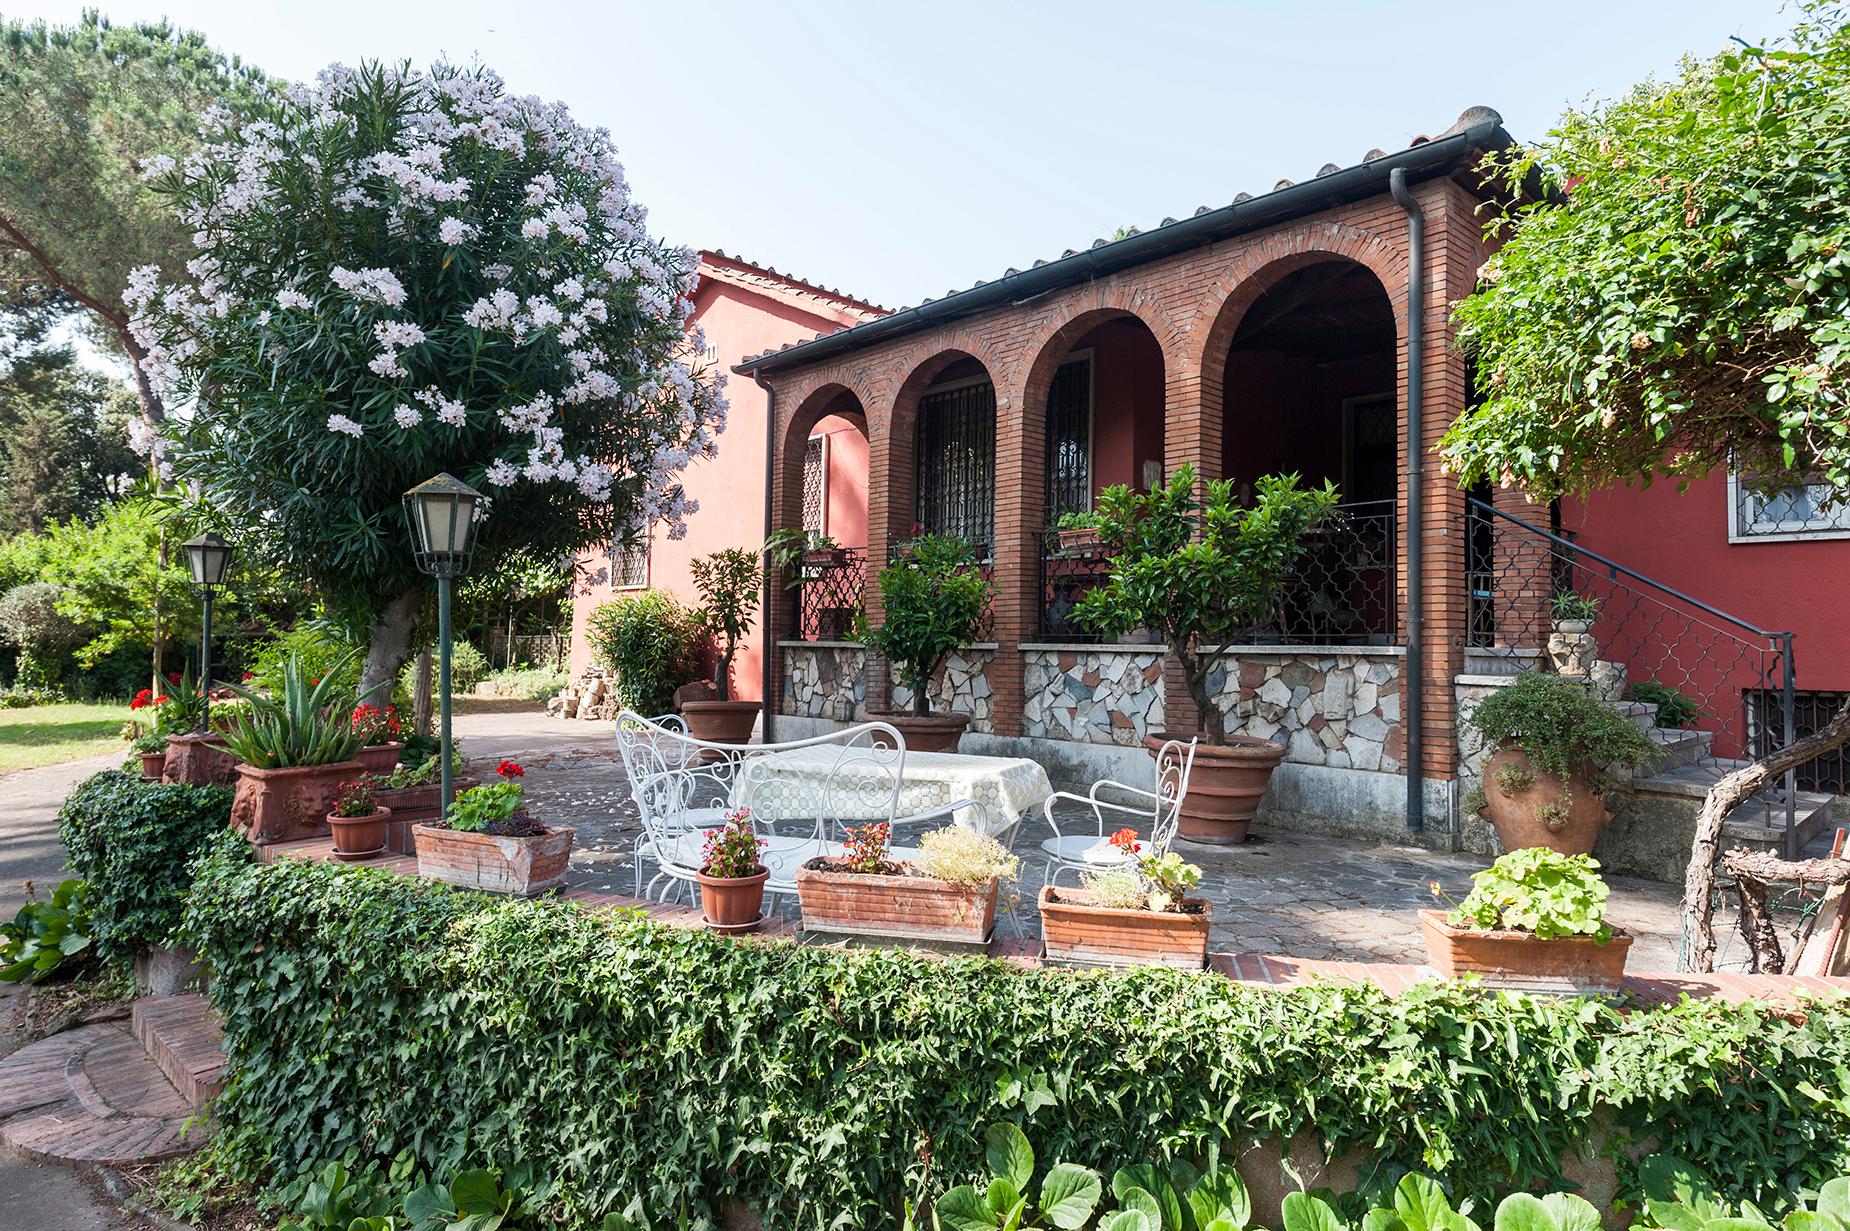                                                     Beautiful villa with large garden near Via Appia Antica                                                     - 2